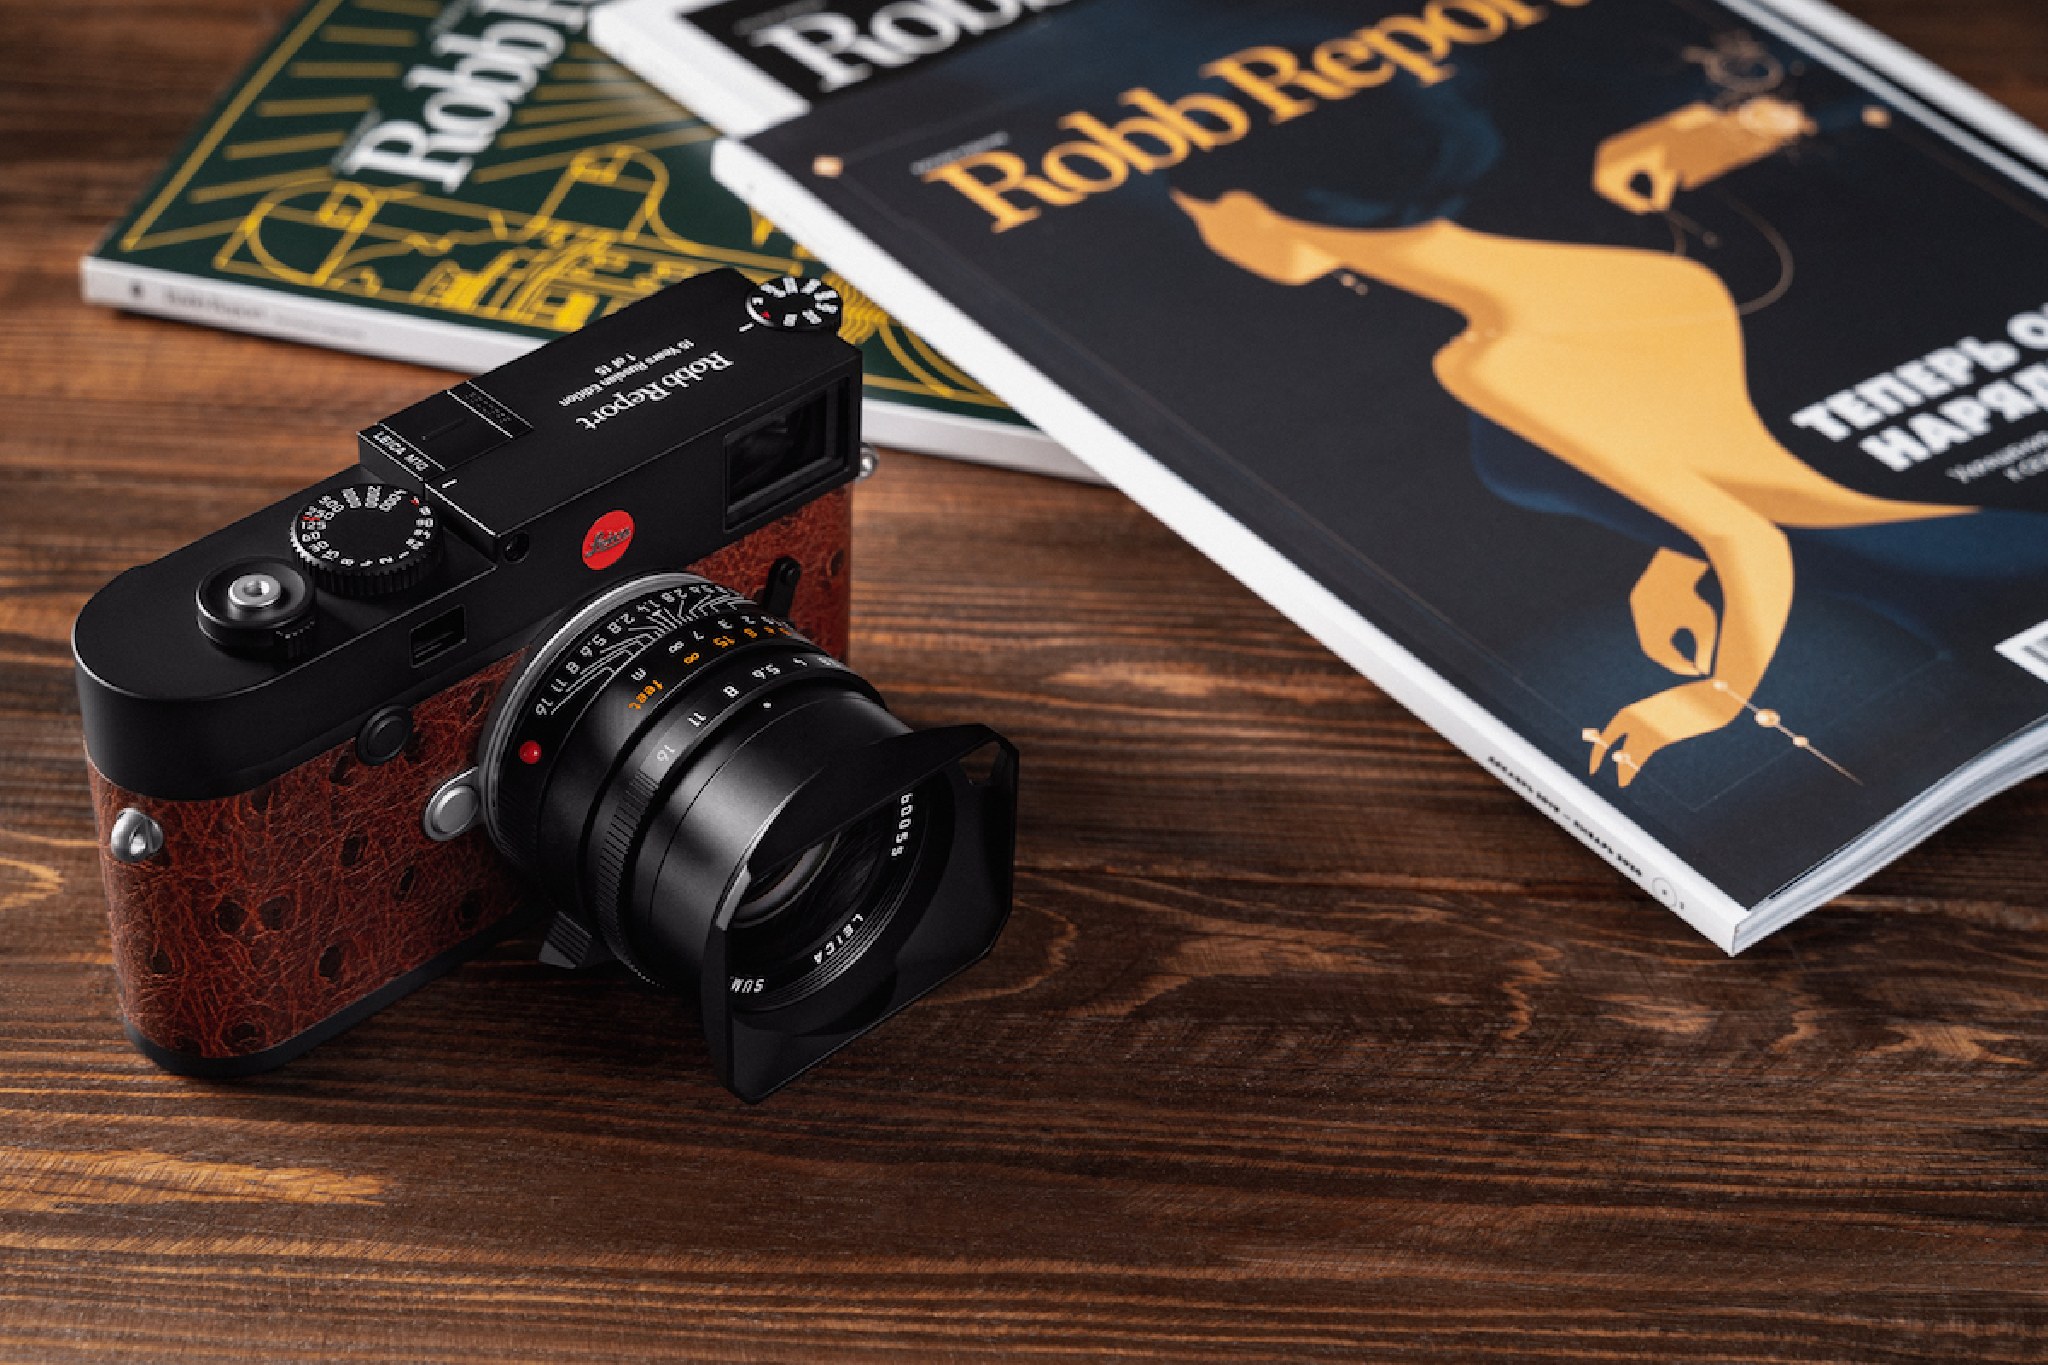 Đang tải Leica-M10-Robb-Report-Russia-15-years-limited-edition-camera-1.jpg…